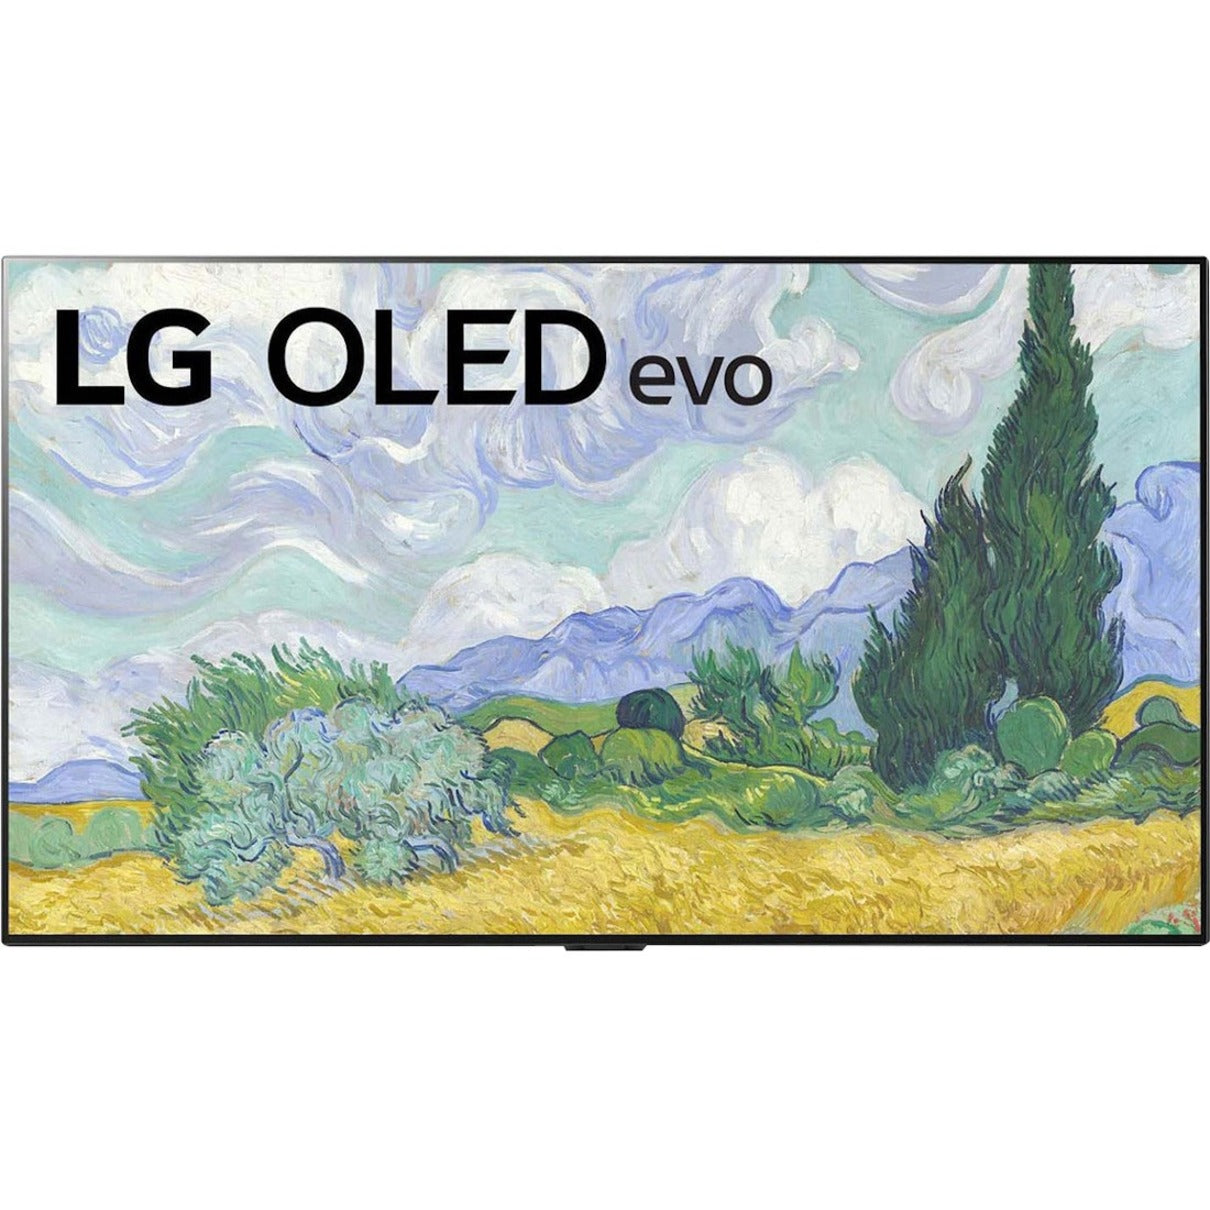 LG OLED77G1PUA G1 Smart OLED TV - 4K UHDTV, 76.7" Screen, Dolby Atmos, 120Hz Refresh Rate